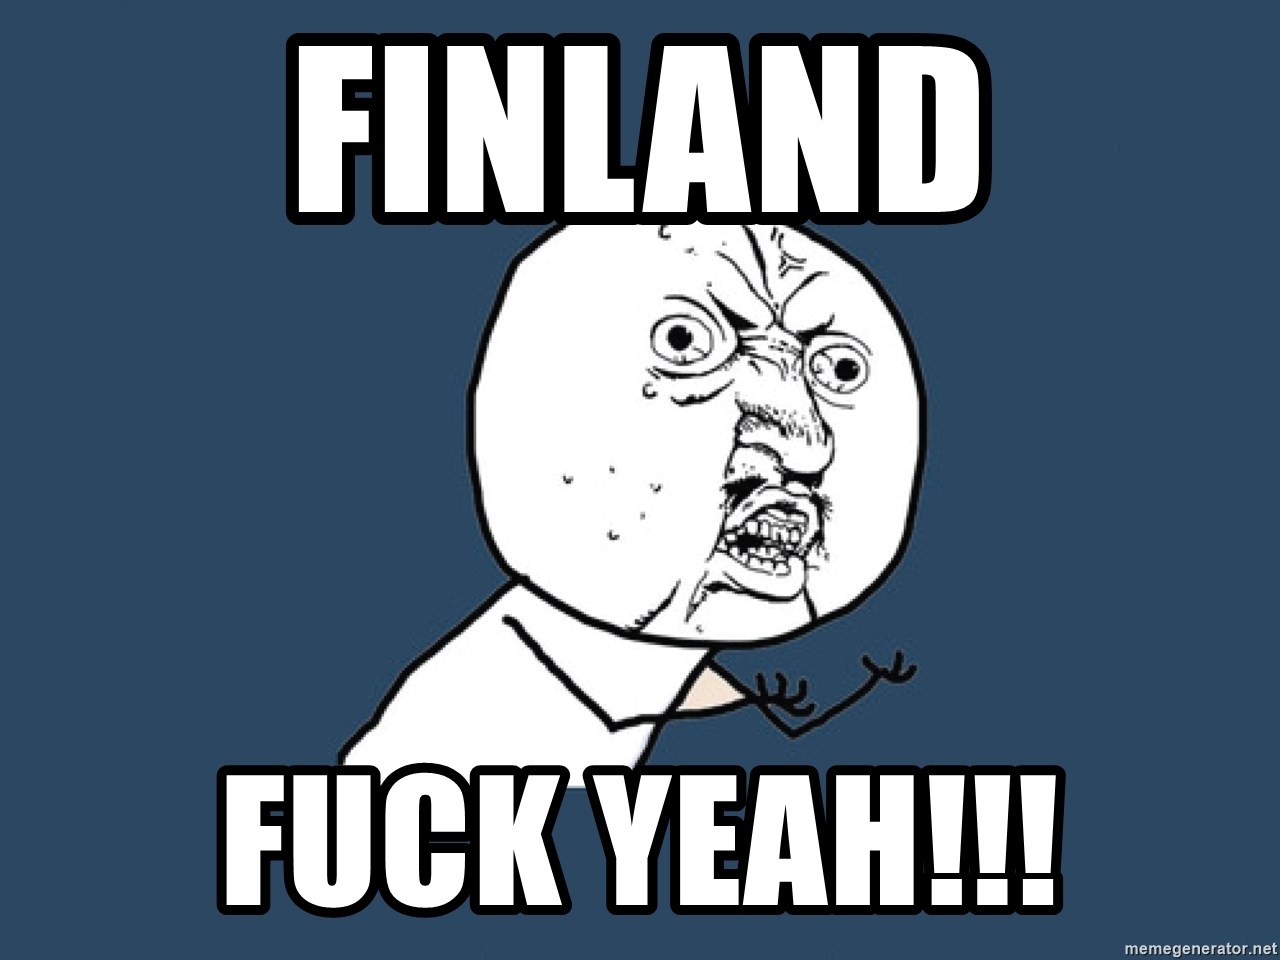 finland-fuck-yeah.jpg